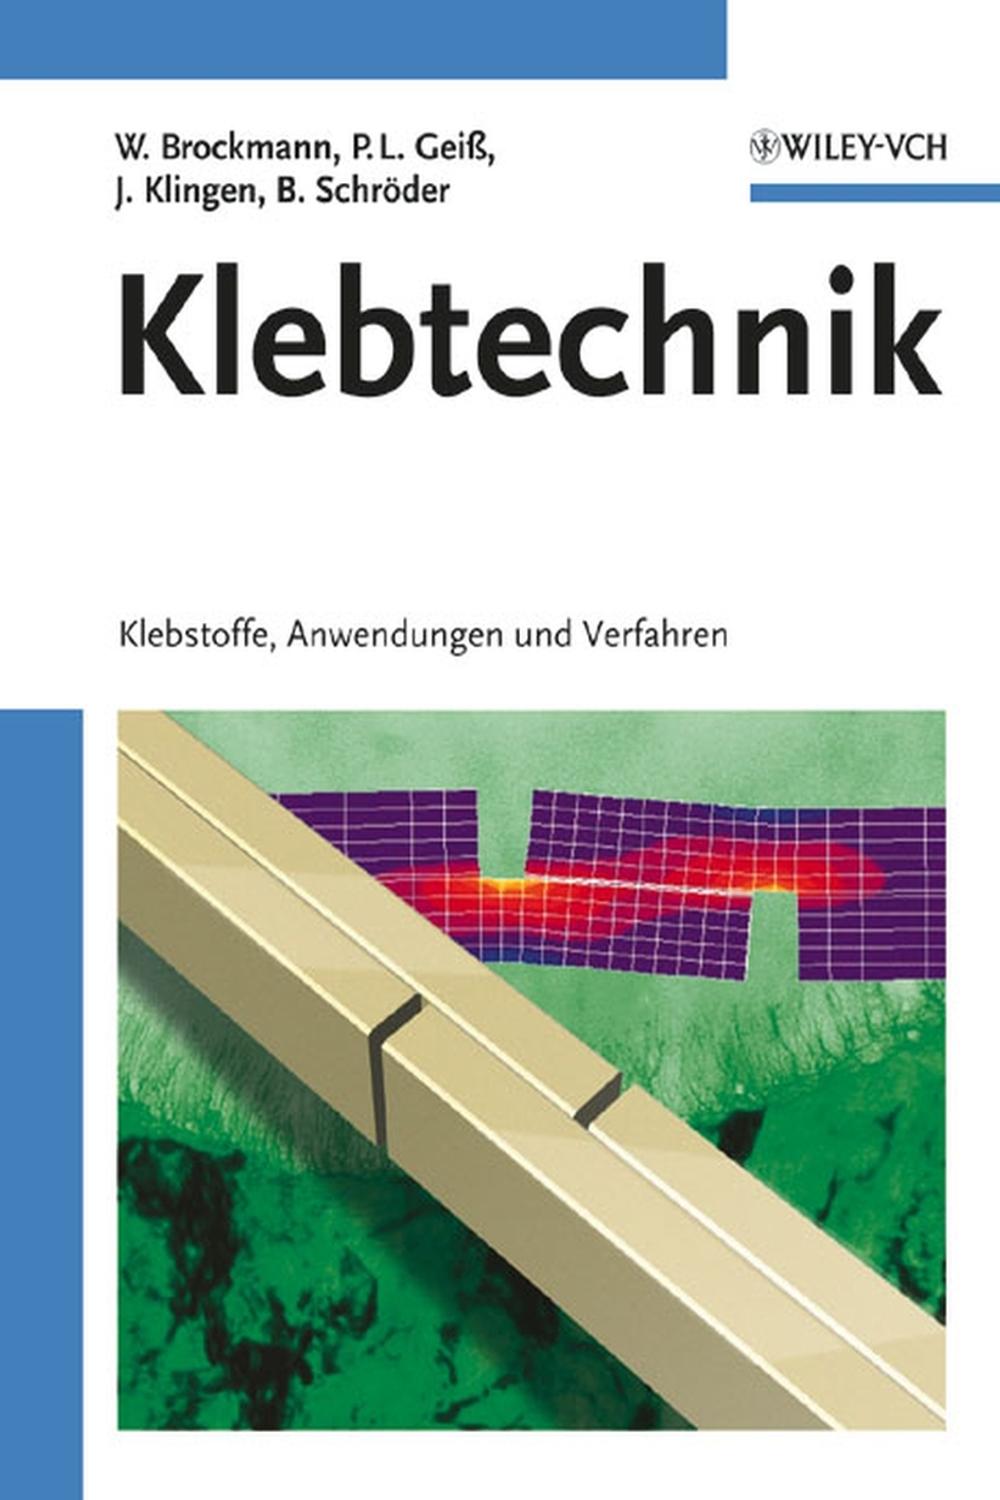 Klebtechnik - Walter Brockmann, Paul Ludwig Geiß, Jürgen Klingen, K. Bernhard Schröder